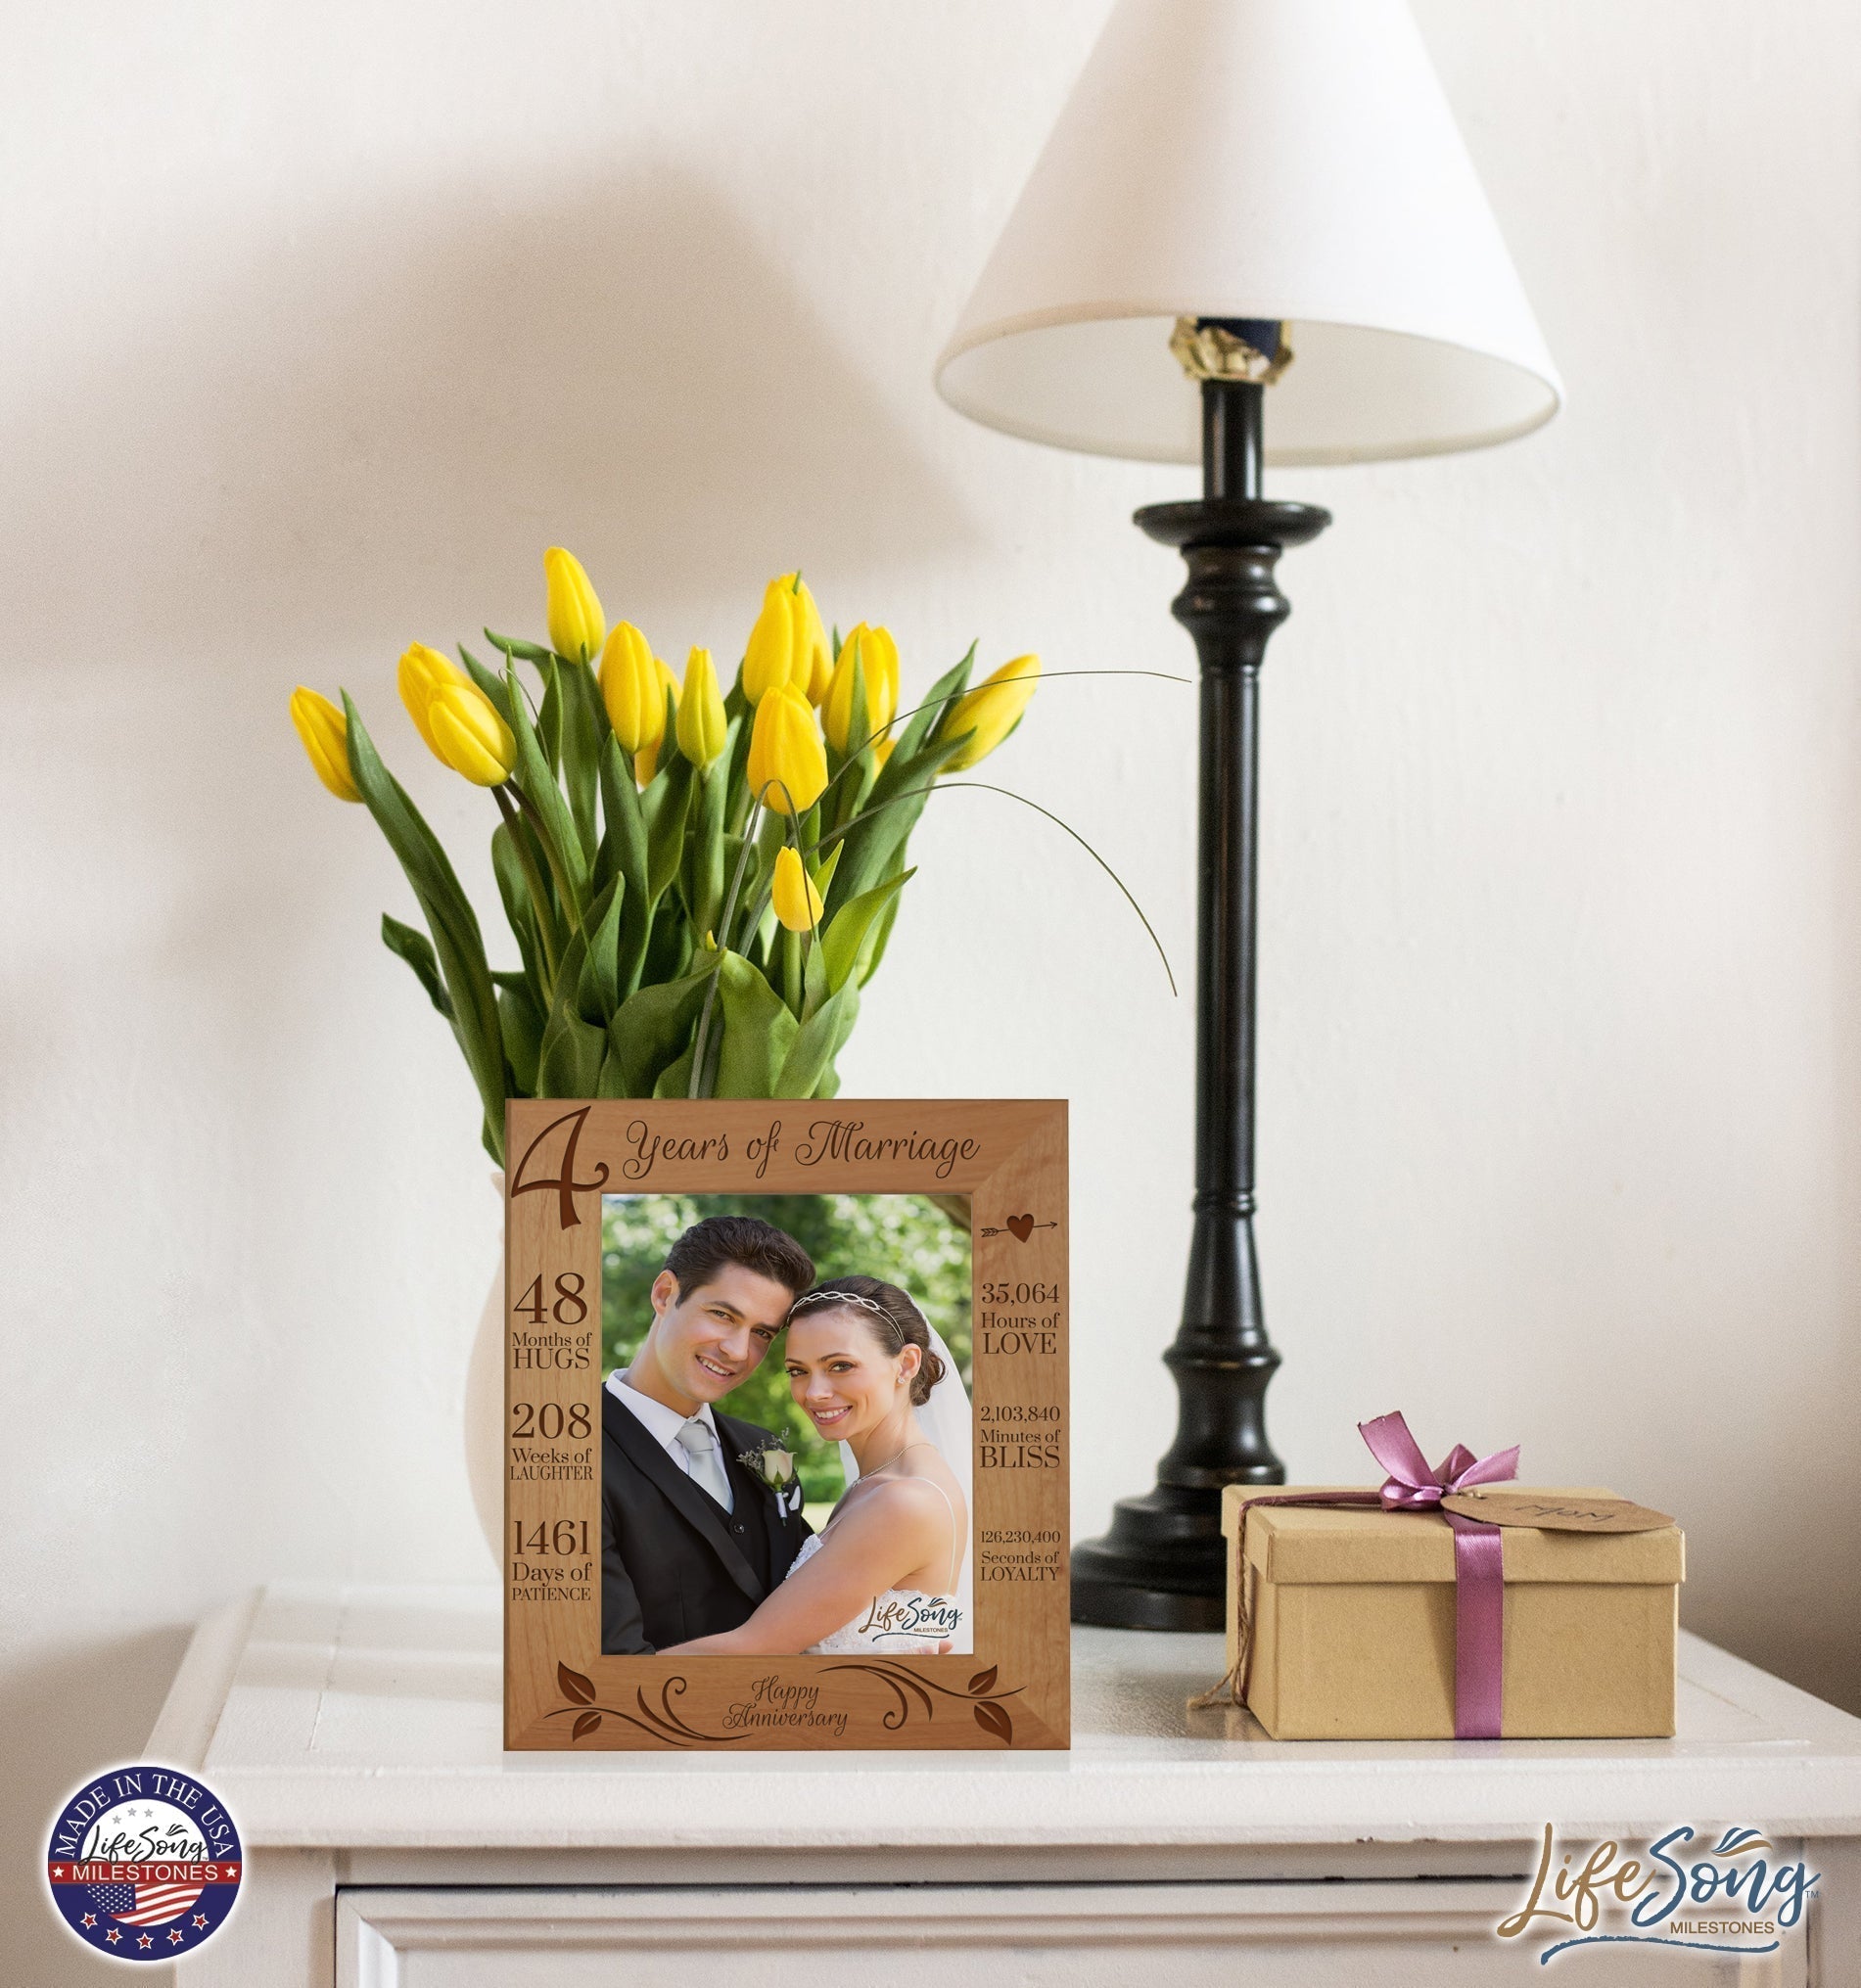 Couples 4th Wedding Anniversary Photo Frame Home Decor Gift Ideas - Happy Anniversary - LifeSong Milestones